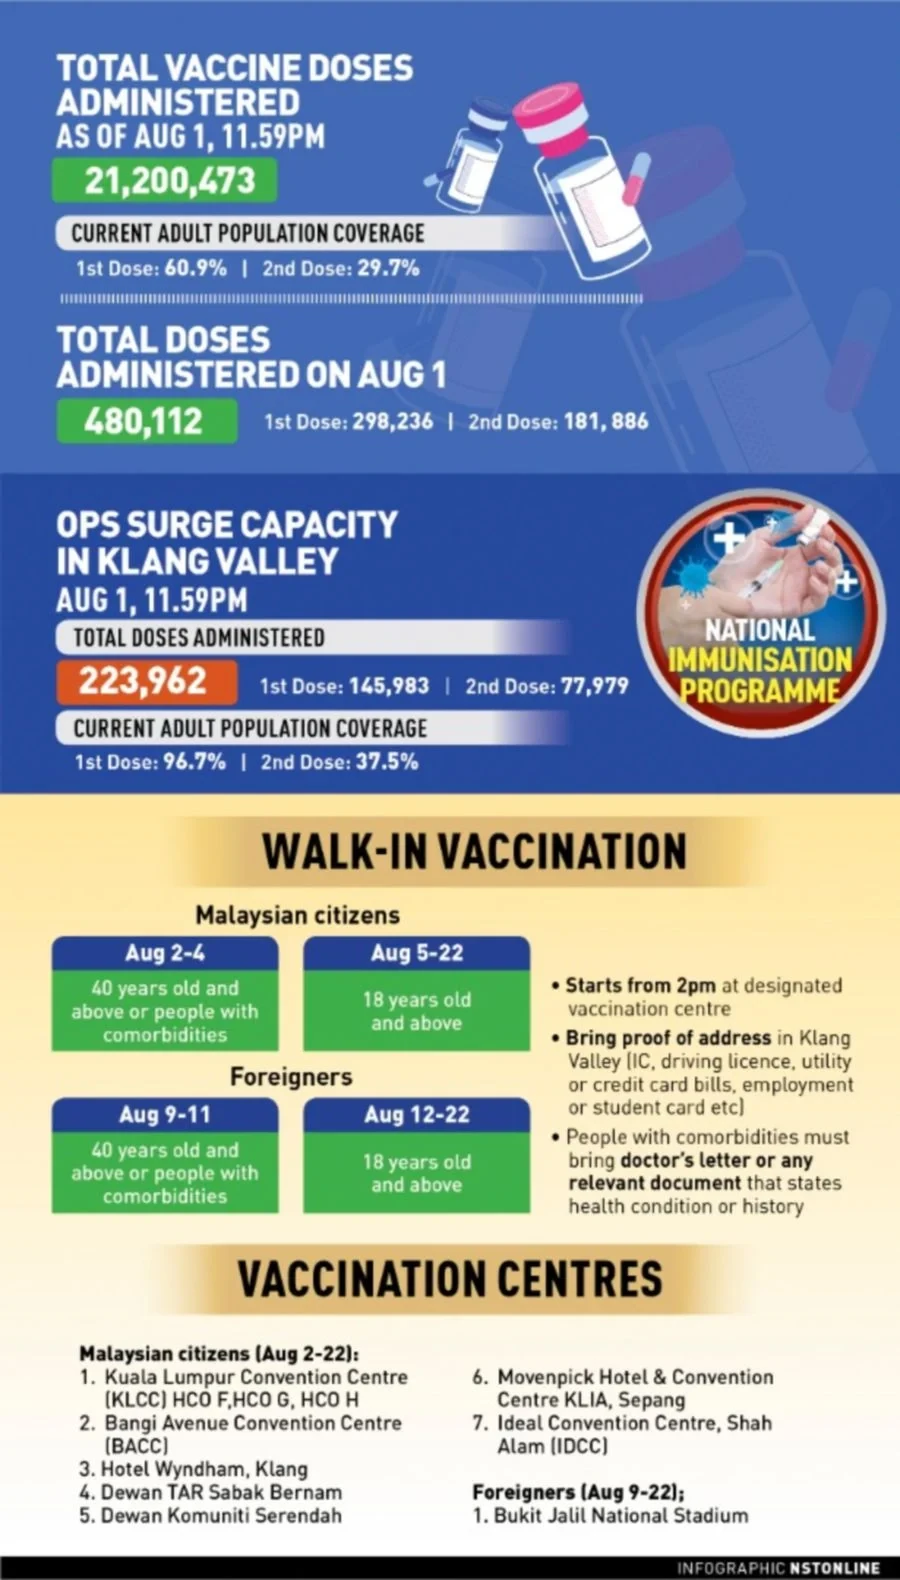 Walk-in Vaccination